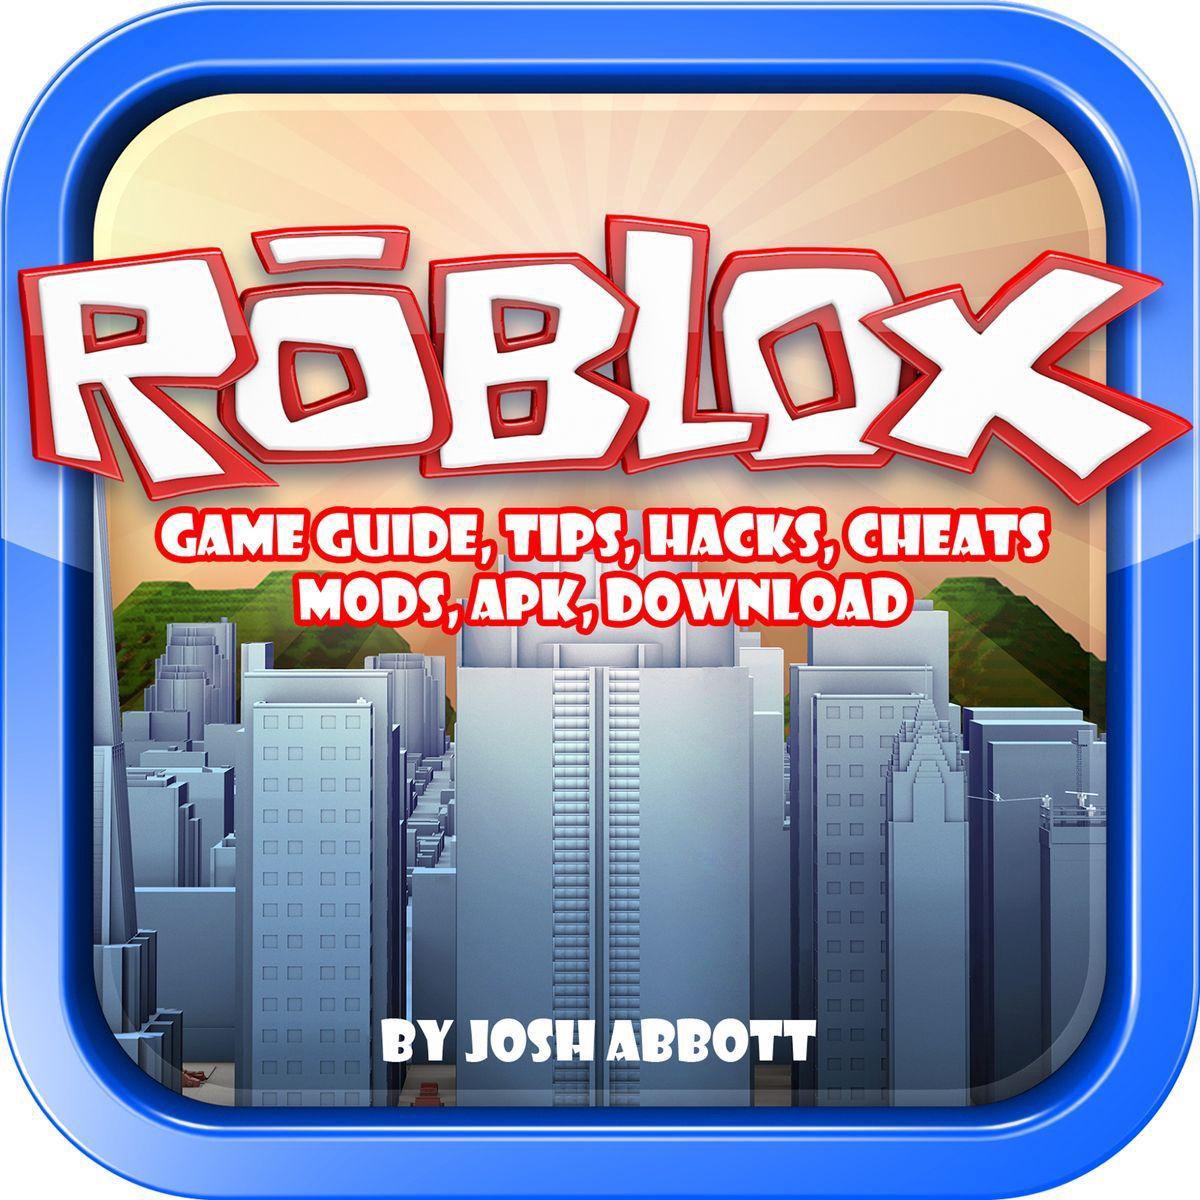 Bol Com Roblox Game Guide Tips Hacks Cheats Mods Apk Download Josh Abbott - hack \u0026 cheats for roblox